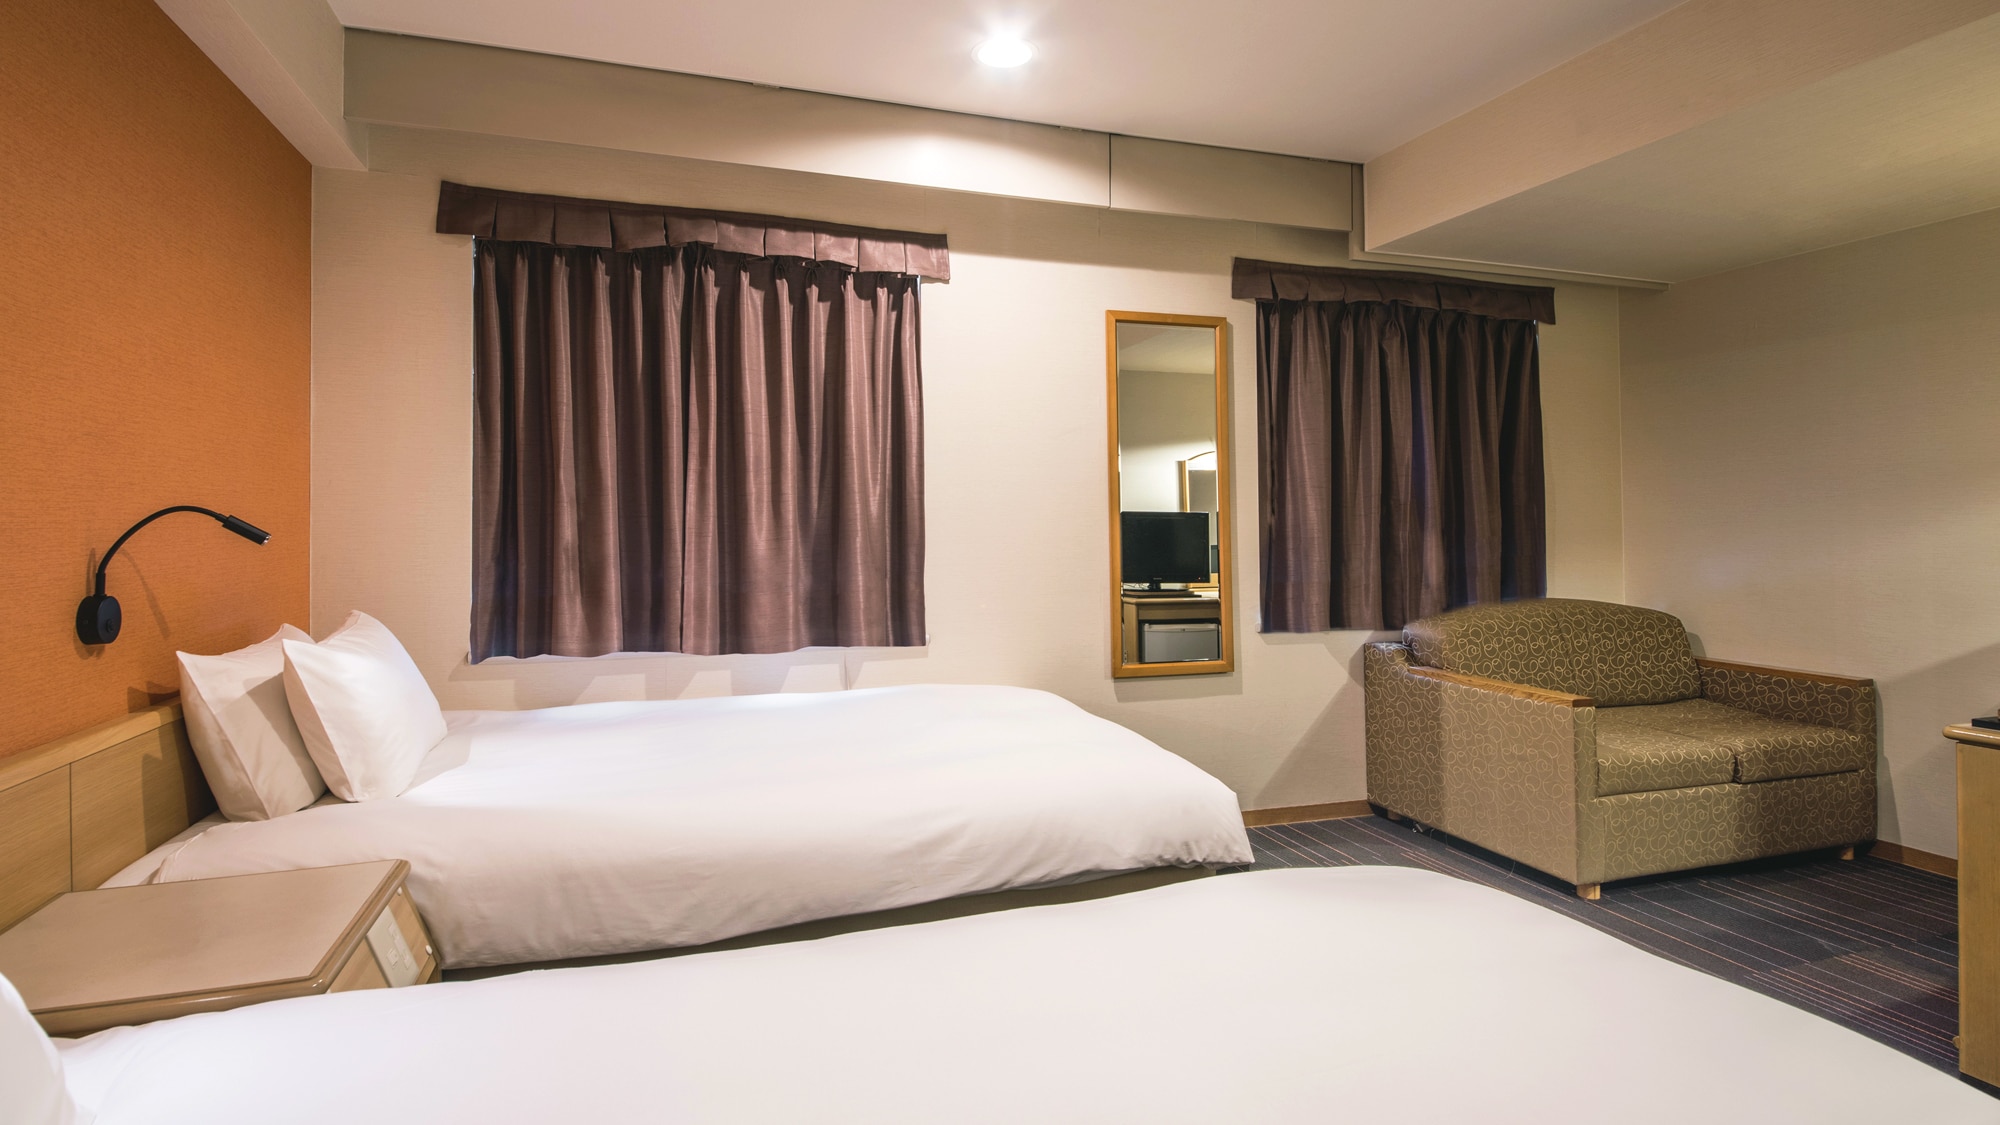 <Room> ◆ Standard Twin ◆ 22 sqm [Bed 120cm x 205cm]